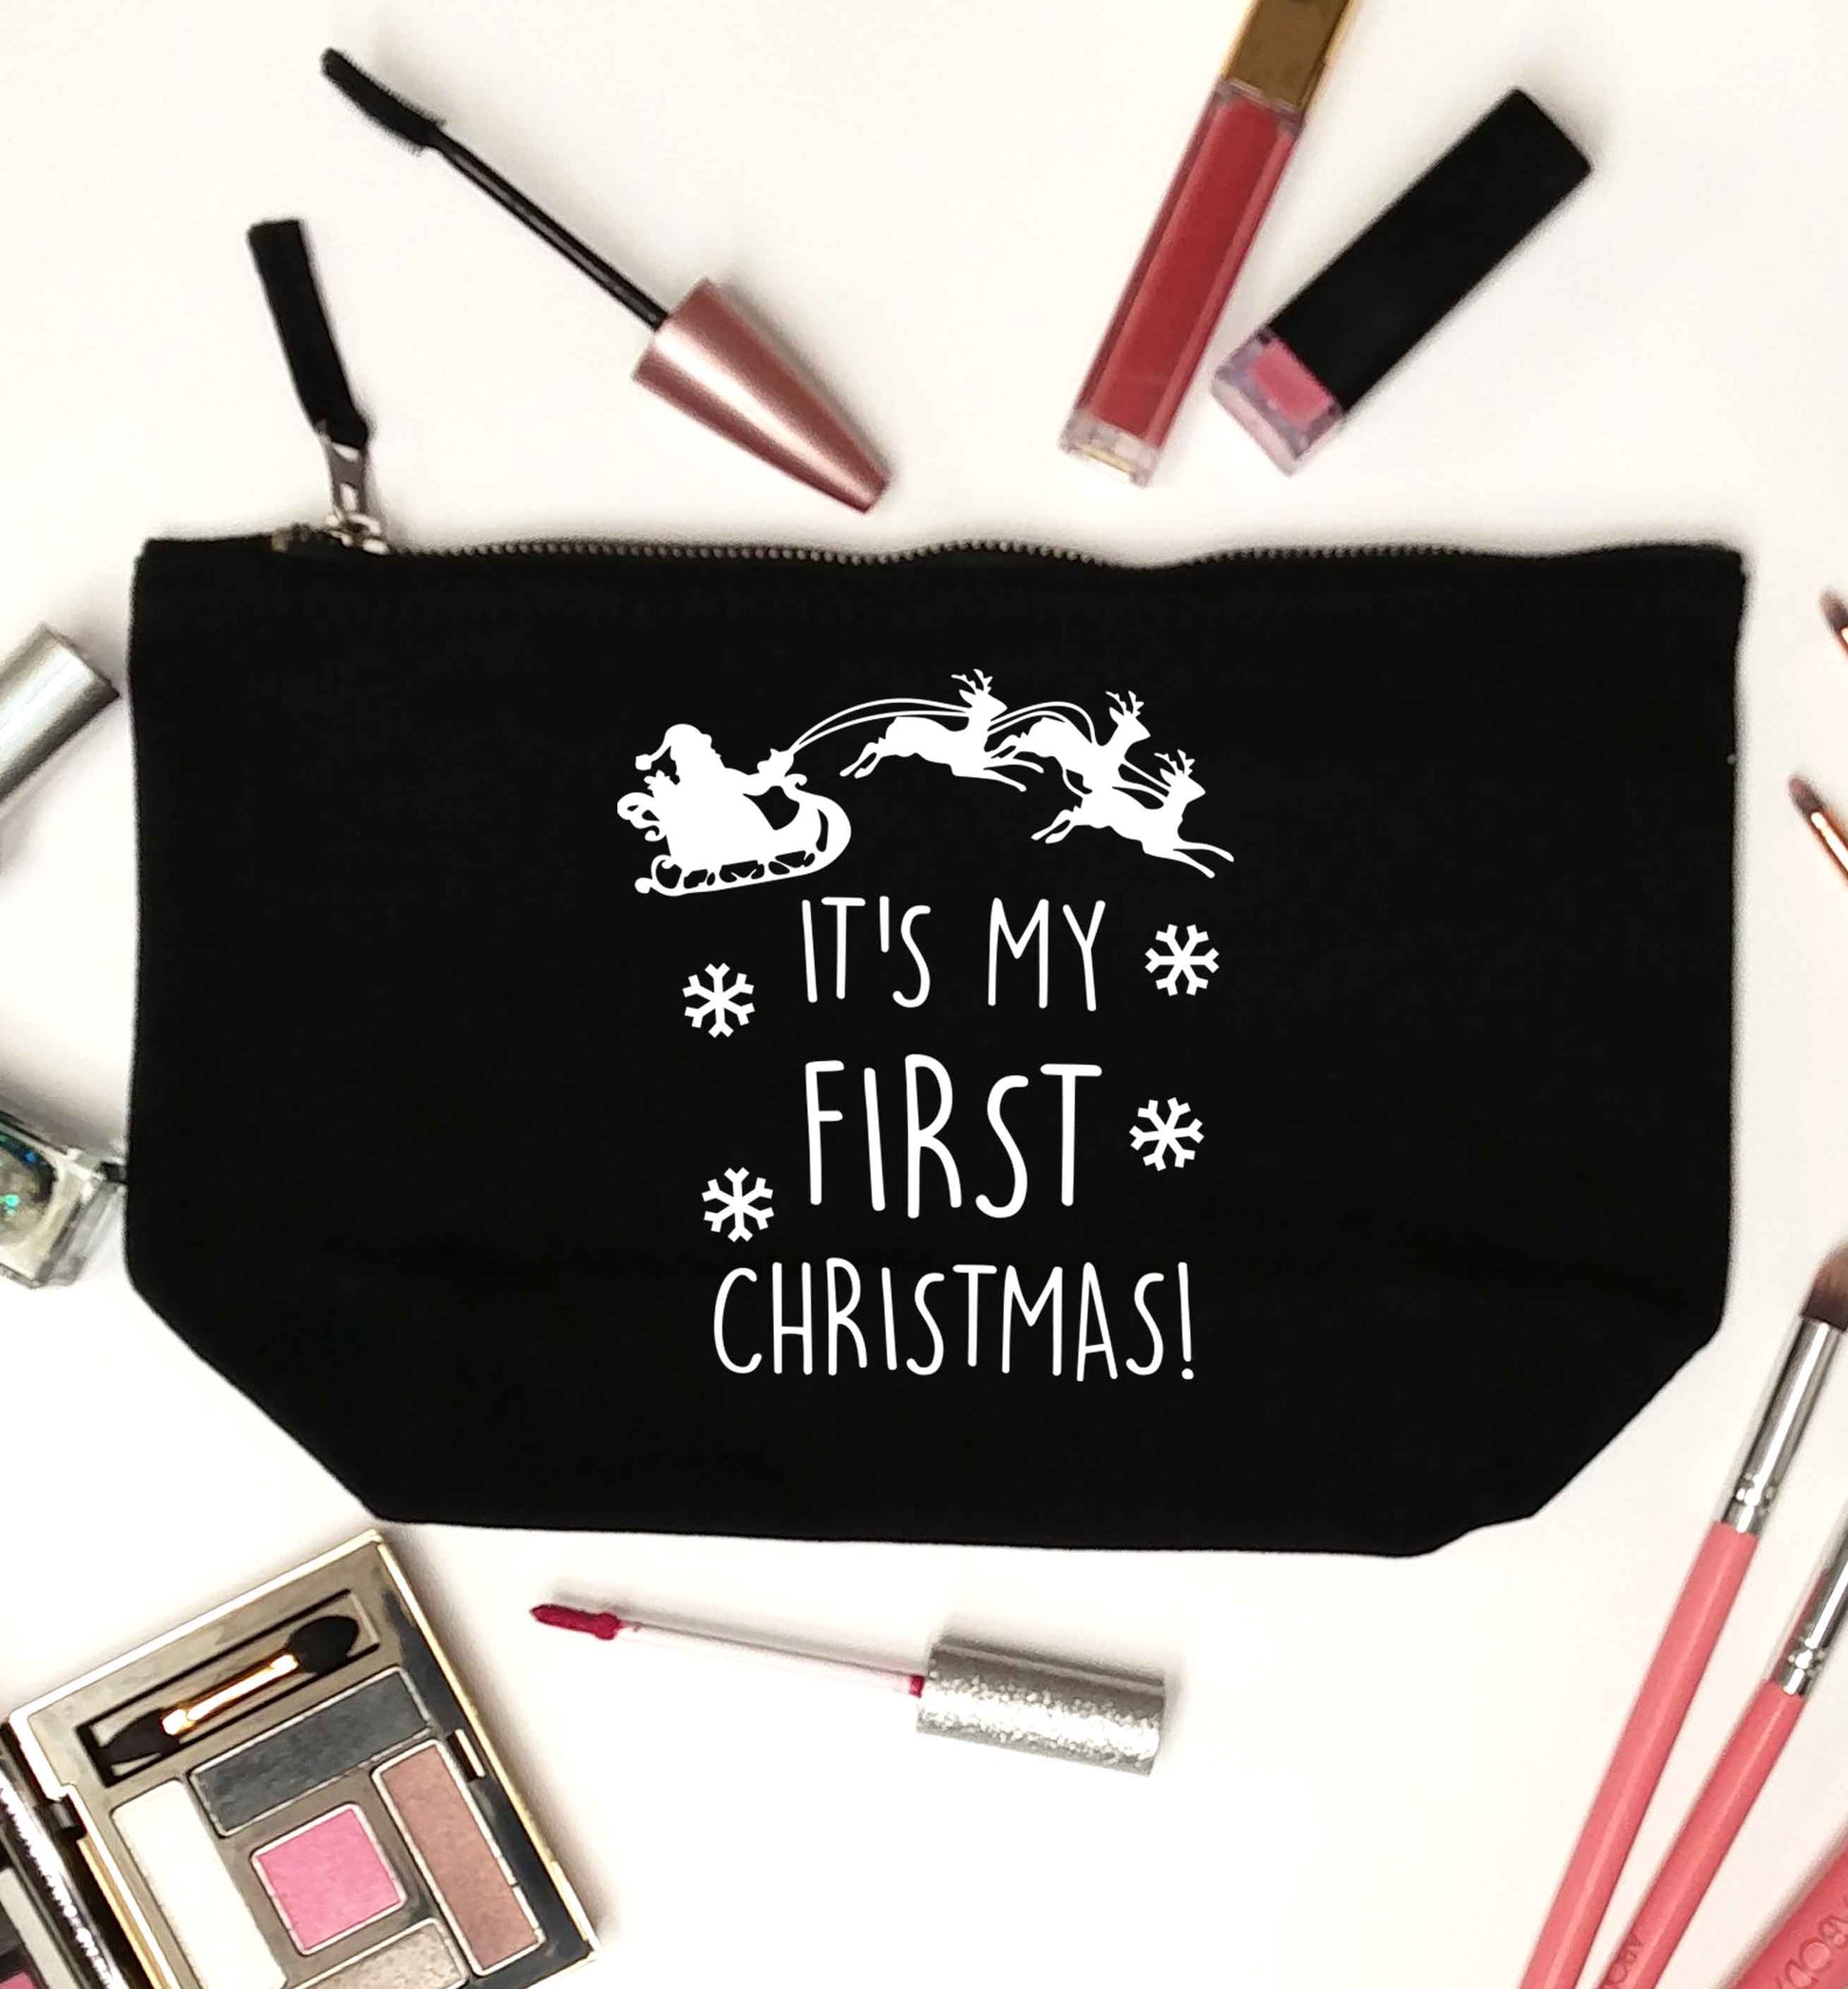 It's my first Christmas - Santa sleigh text black makeup bag